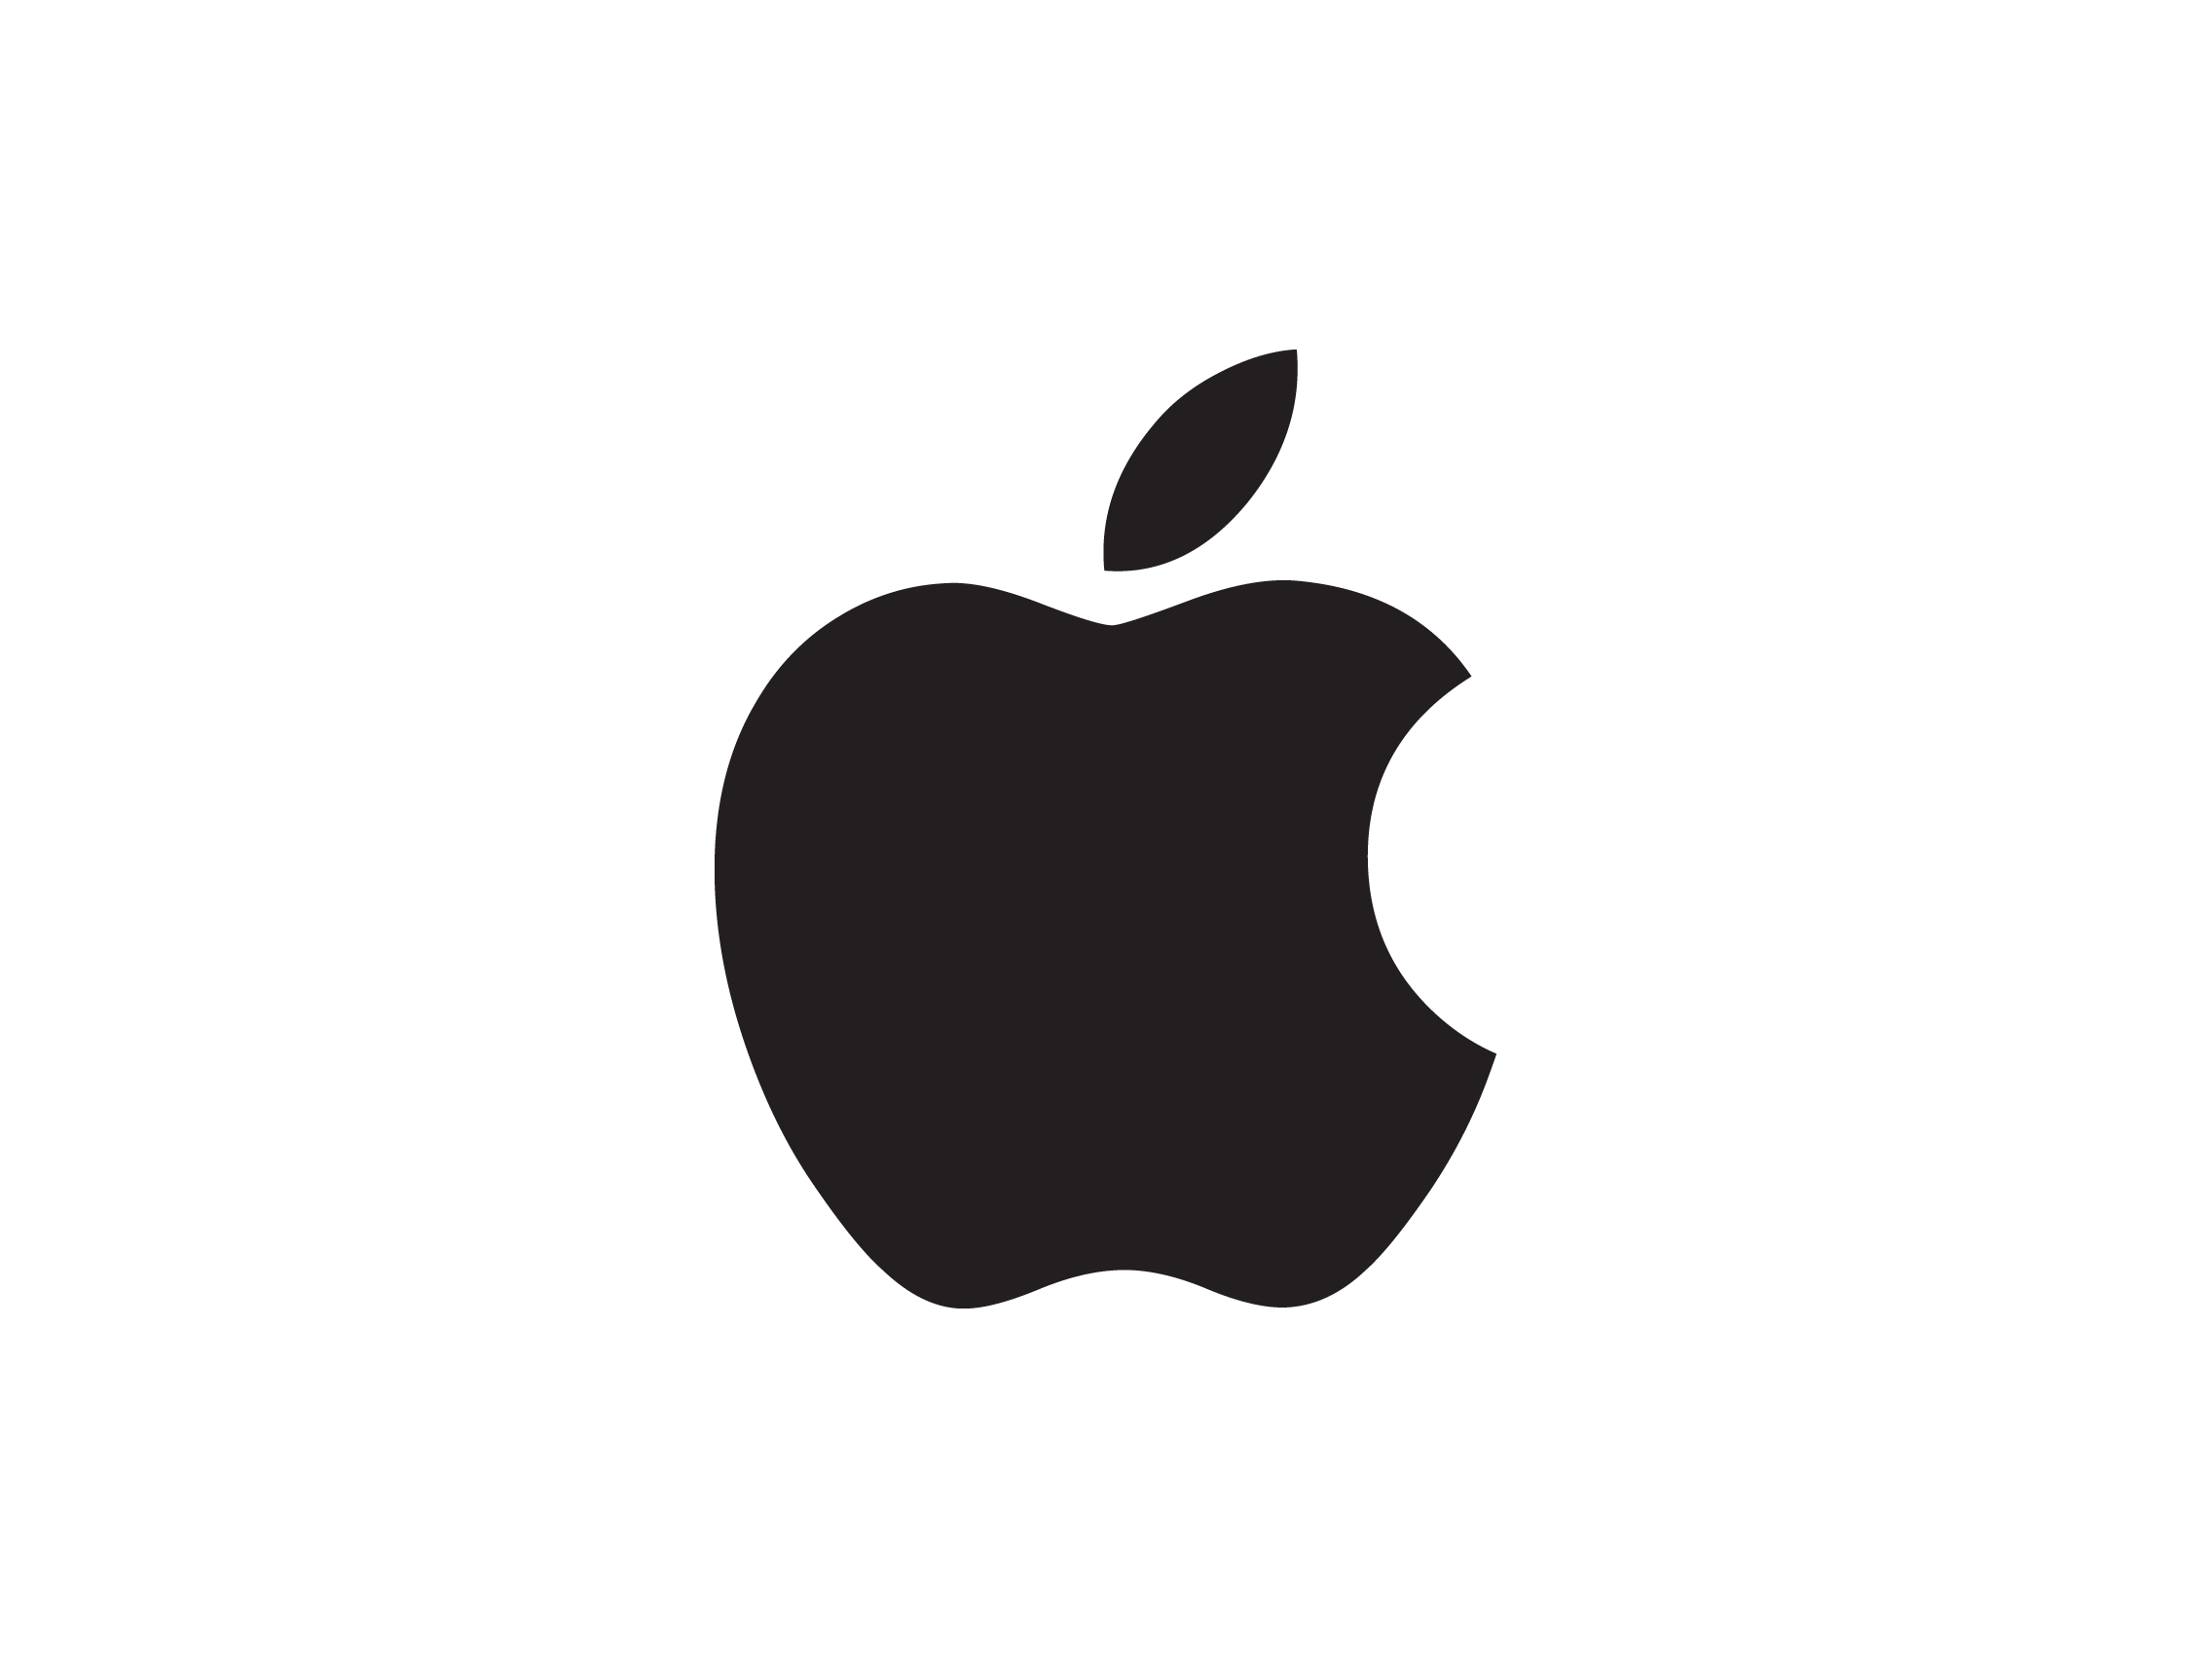 White On Black Background Apple Logo - 20 Apple logo png transparent background for free download on YA ...